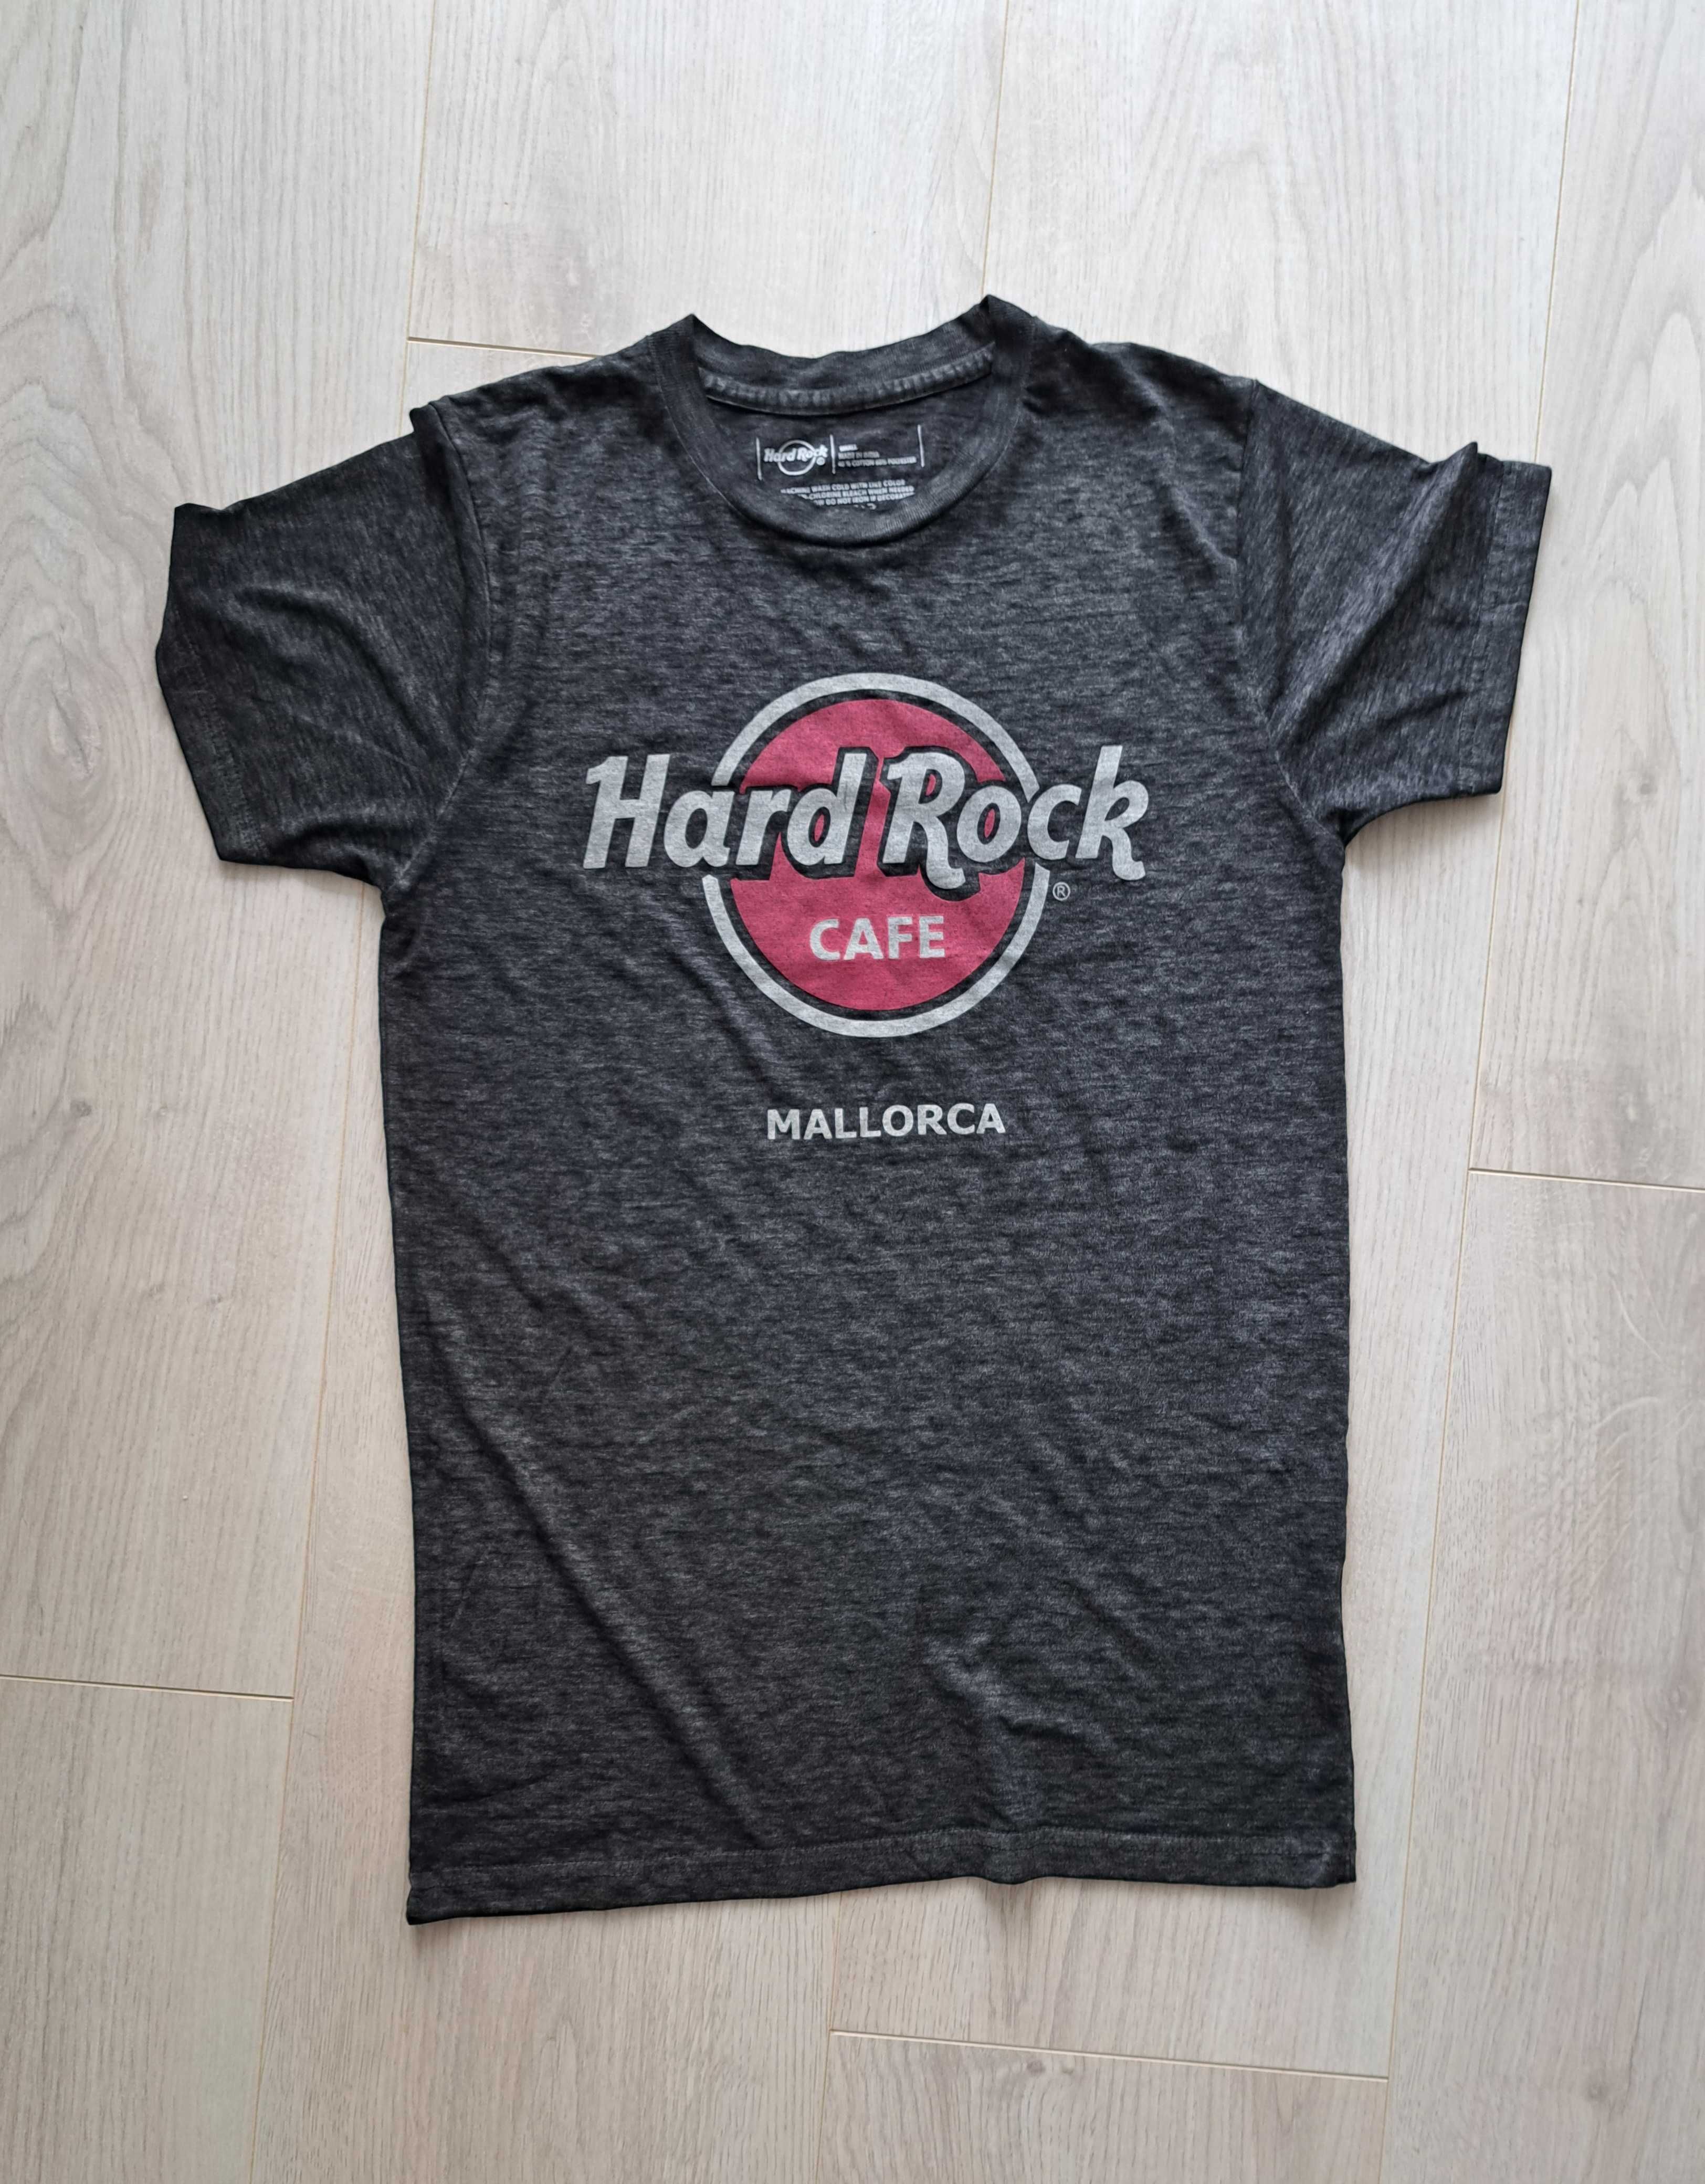 Hard Rock cafe tricou S Mallorca